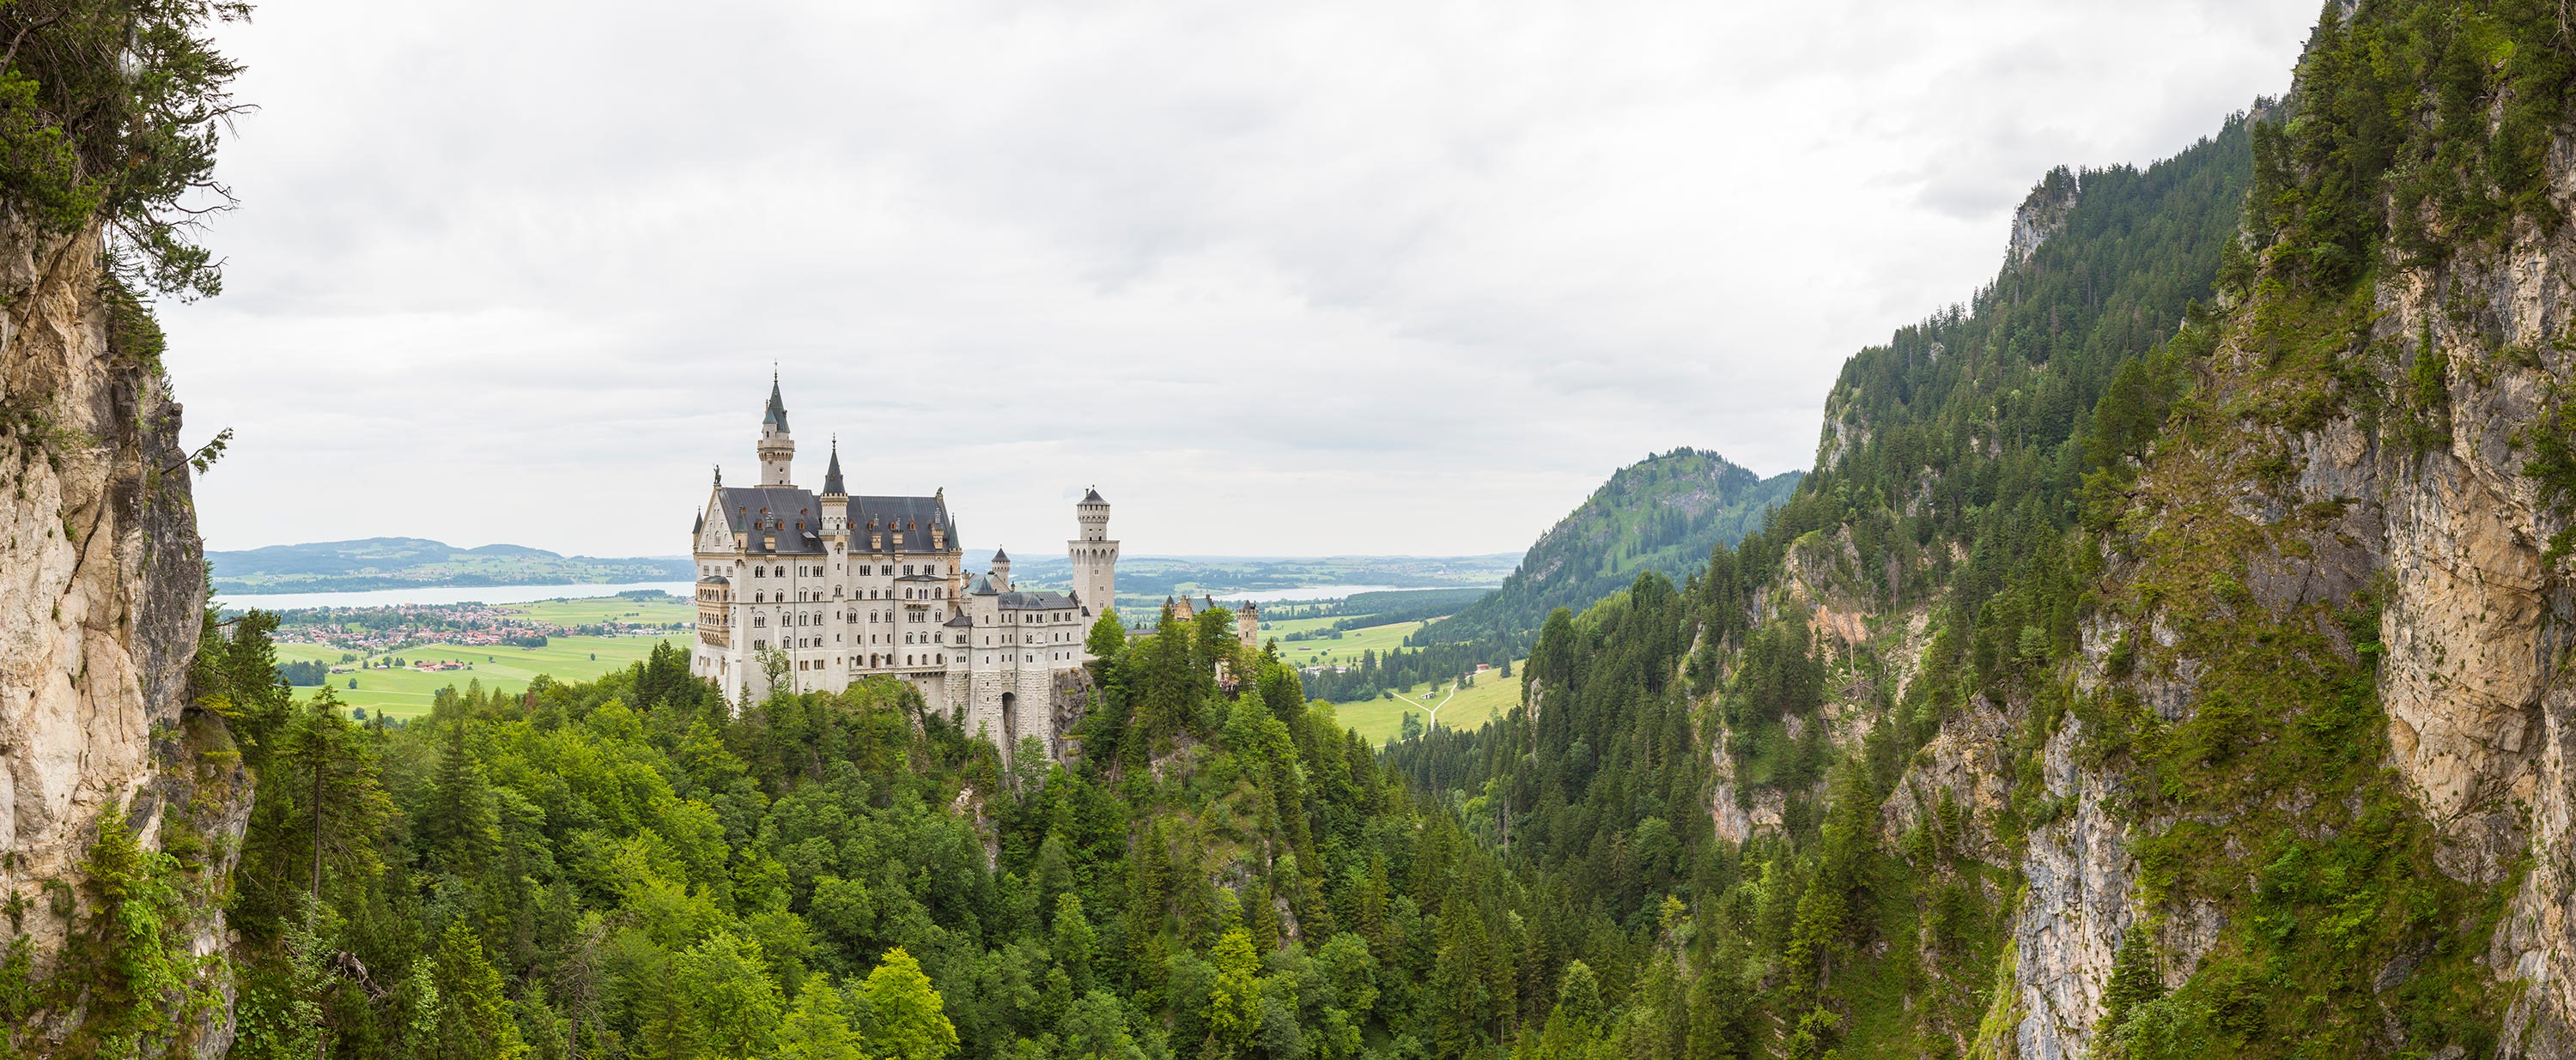 _BavariaCastle-Panorama